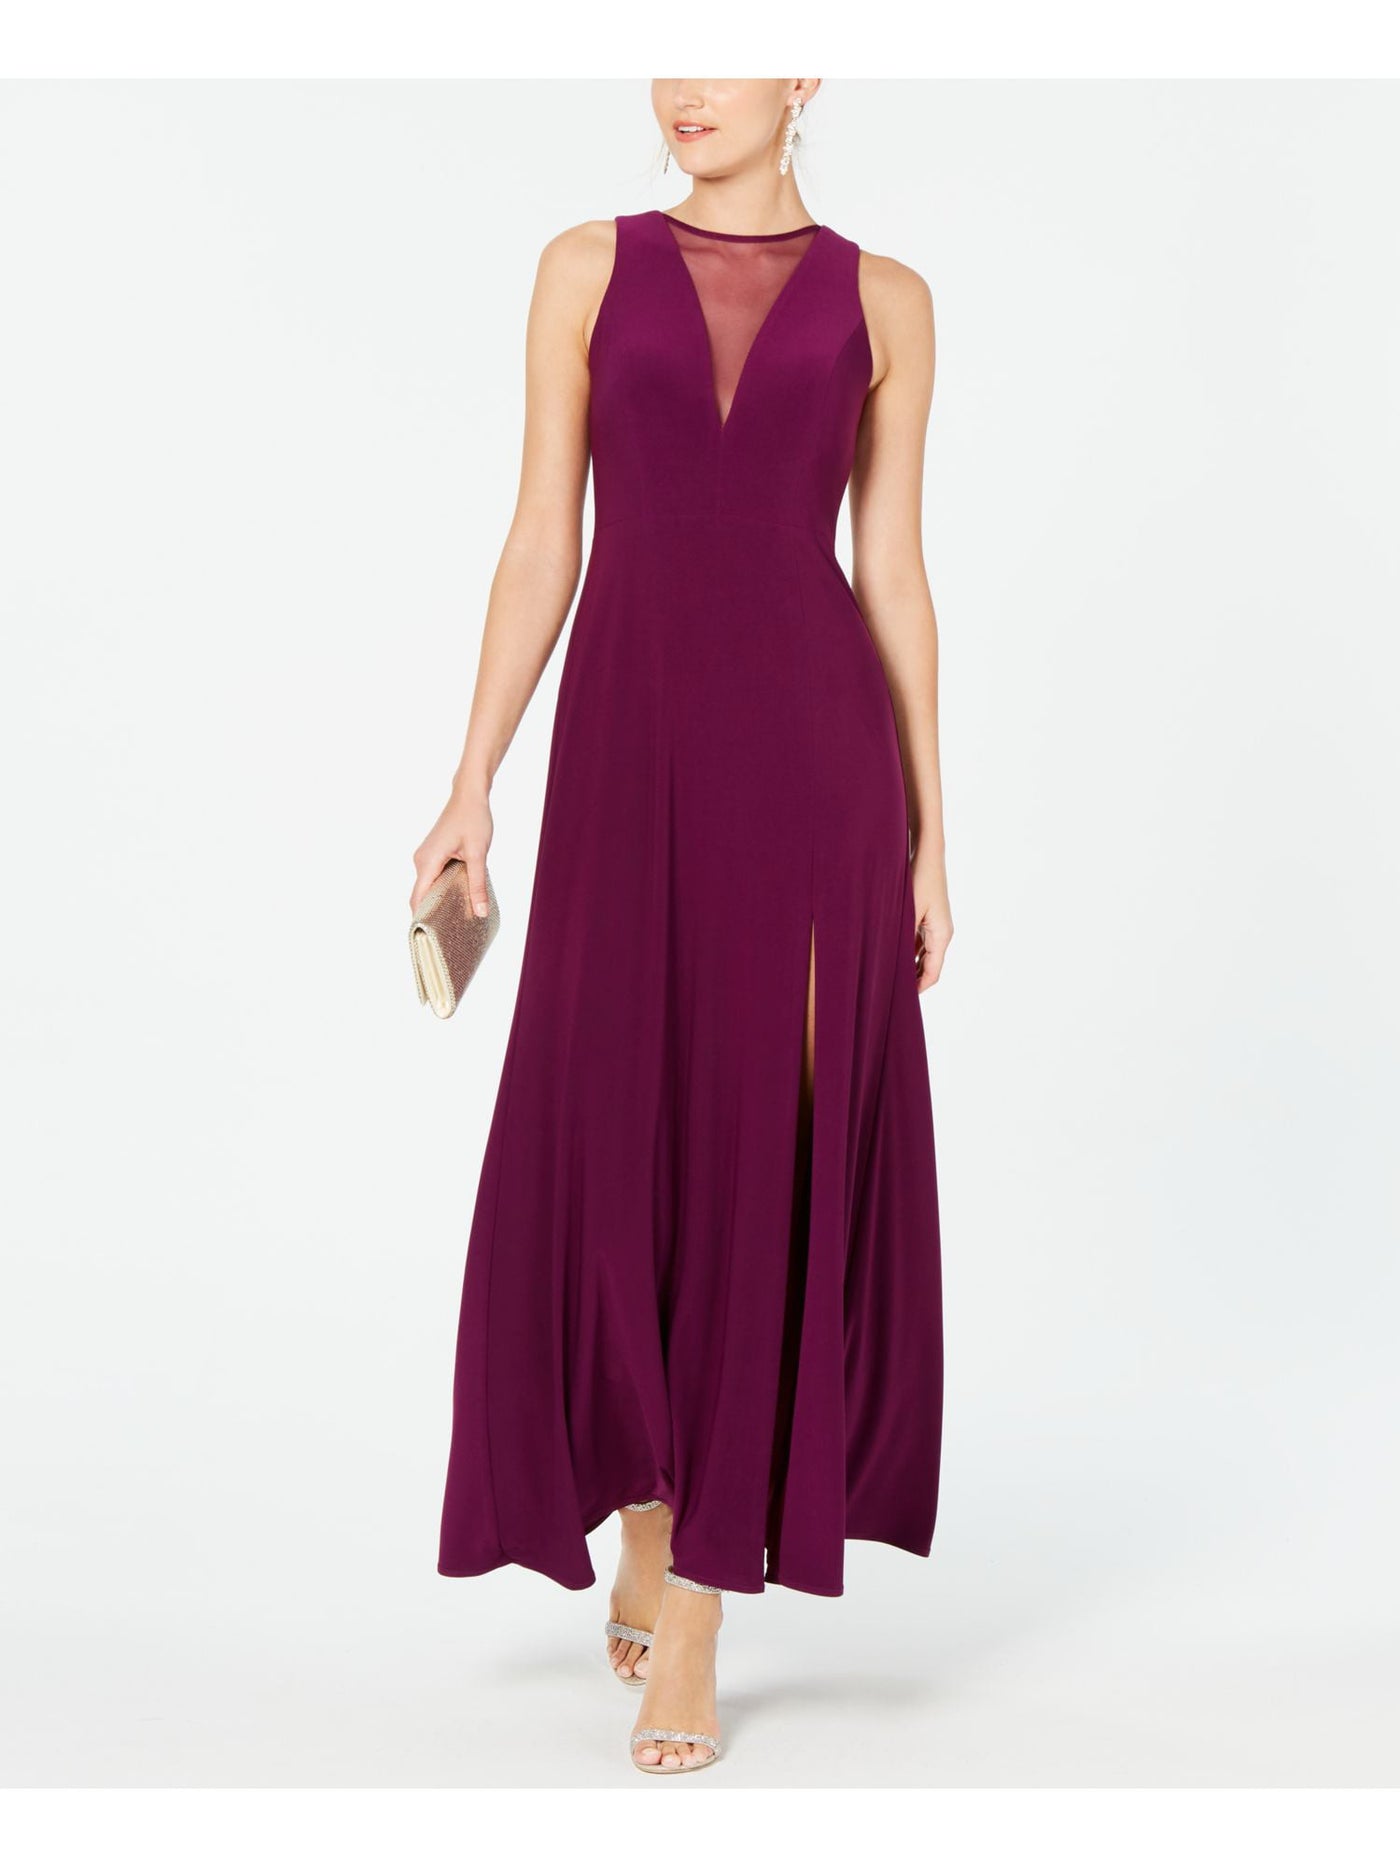 NIGHTWAY Womens Purple Sleeveless Halter Maxi Formal Sheath Dress 12